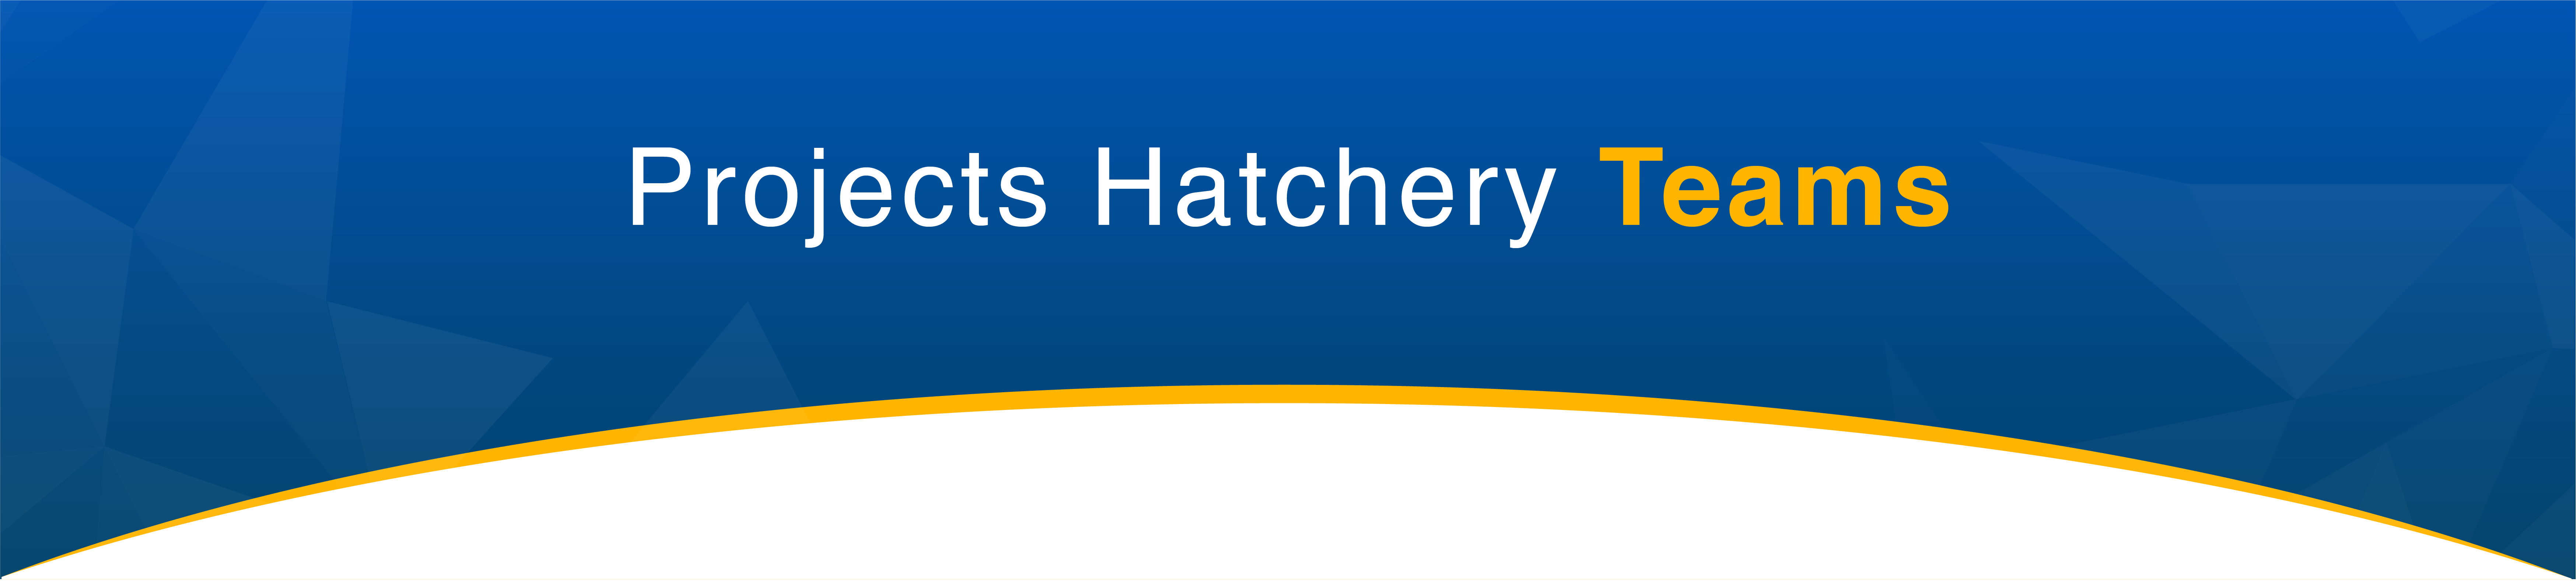 Projects Hatchery Teams